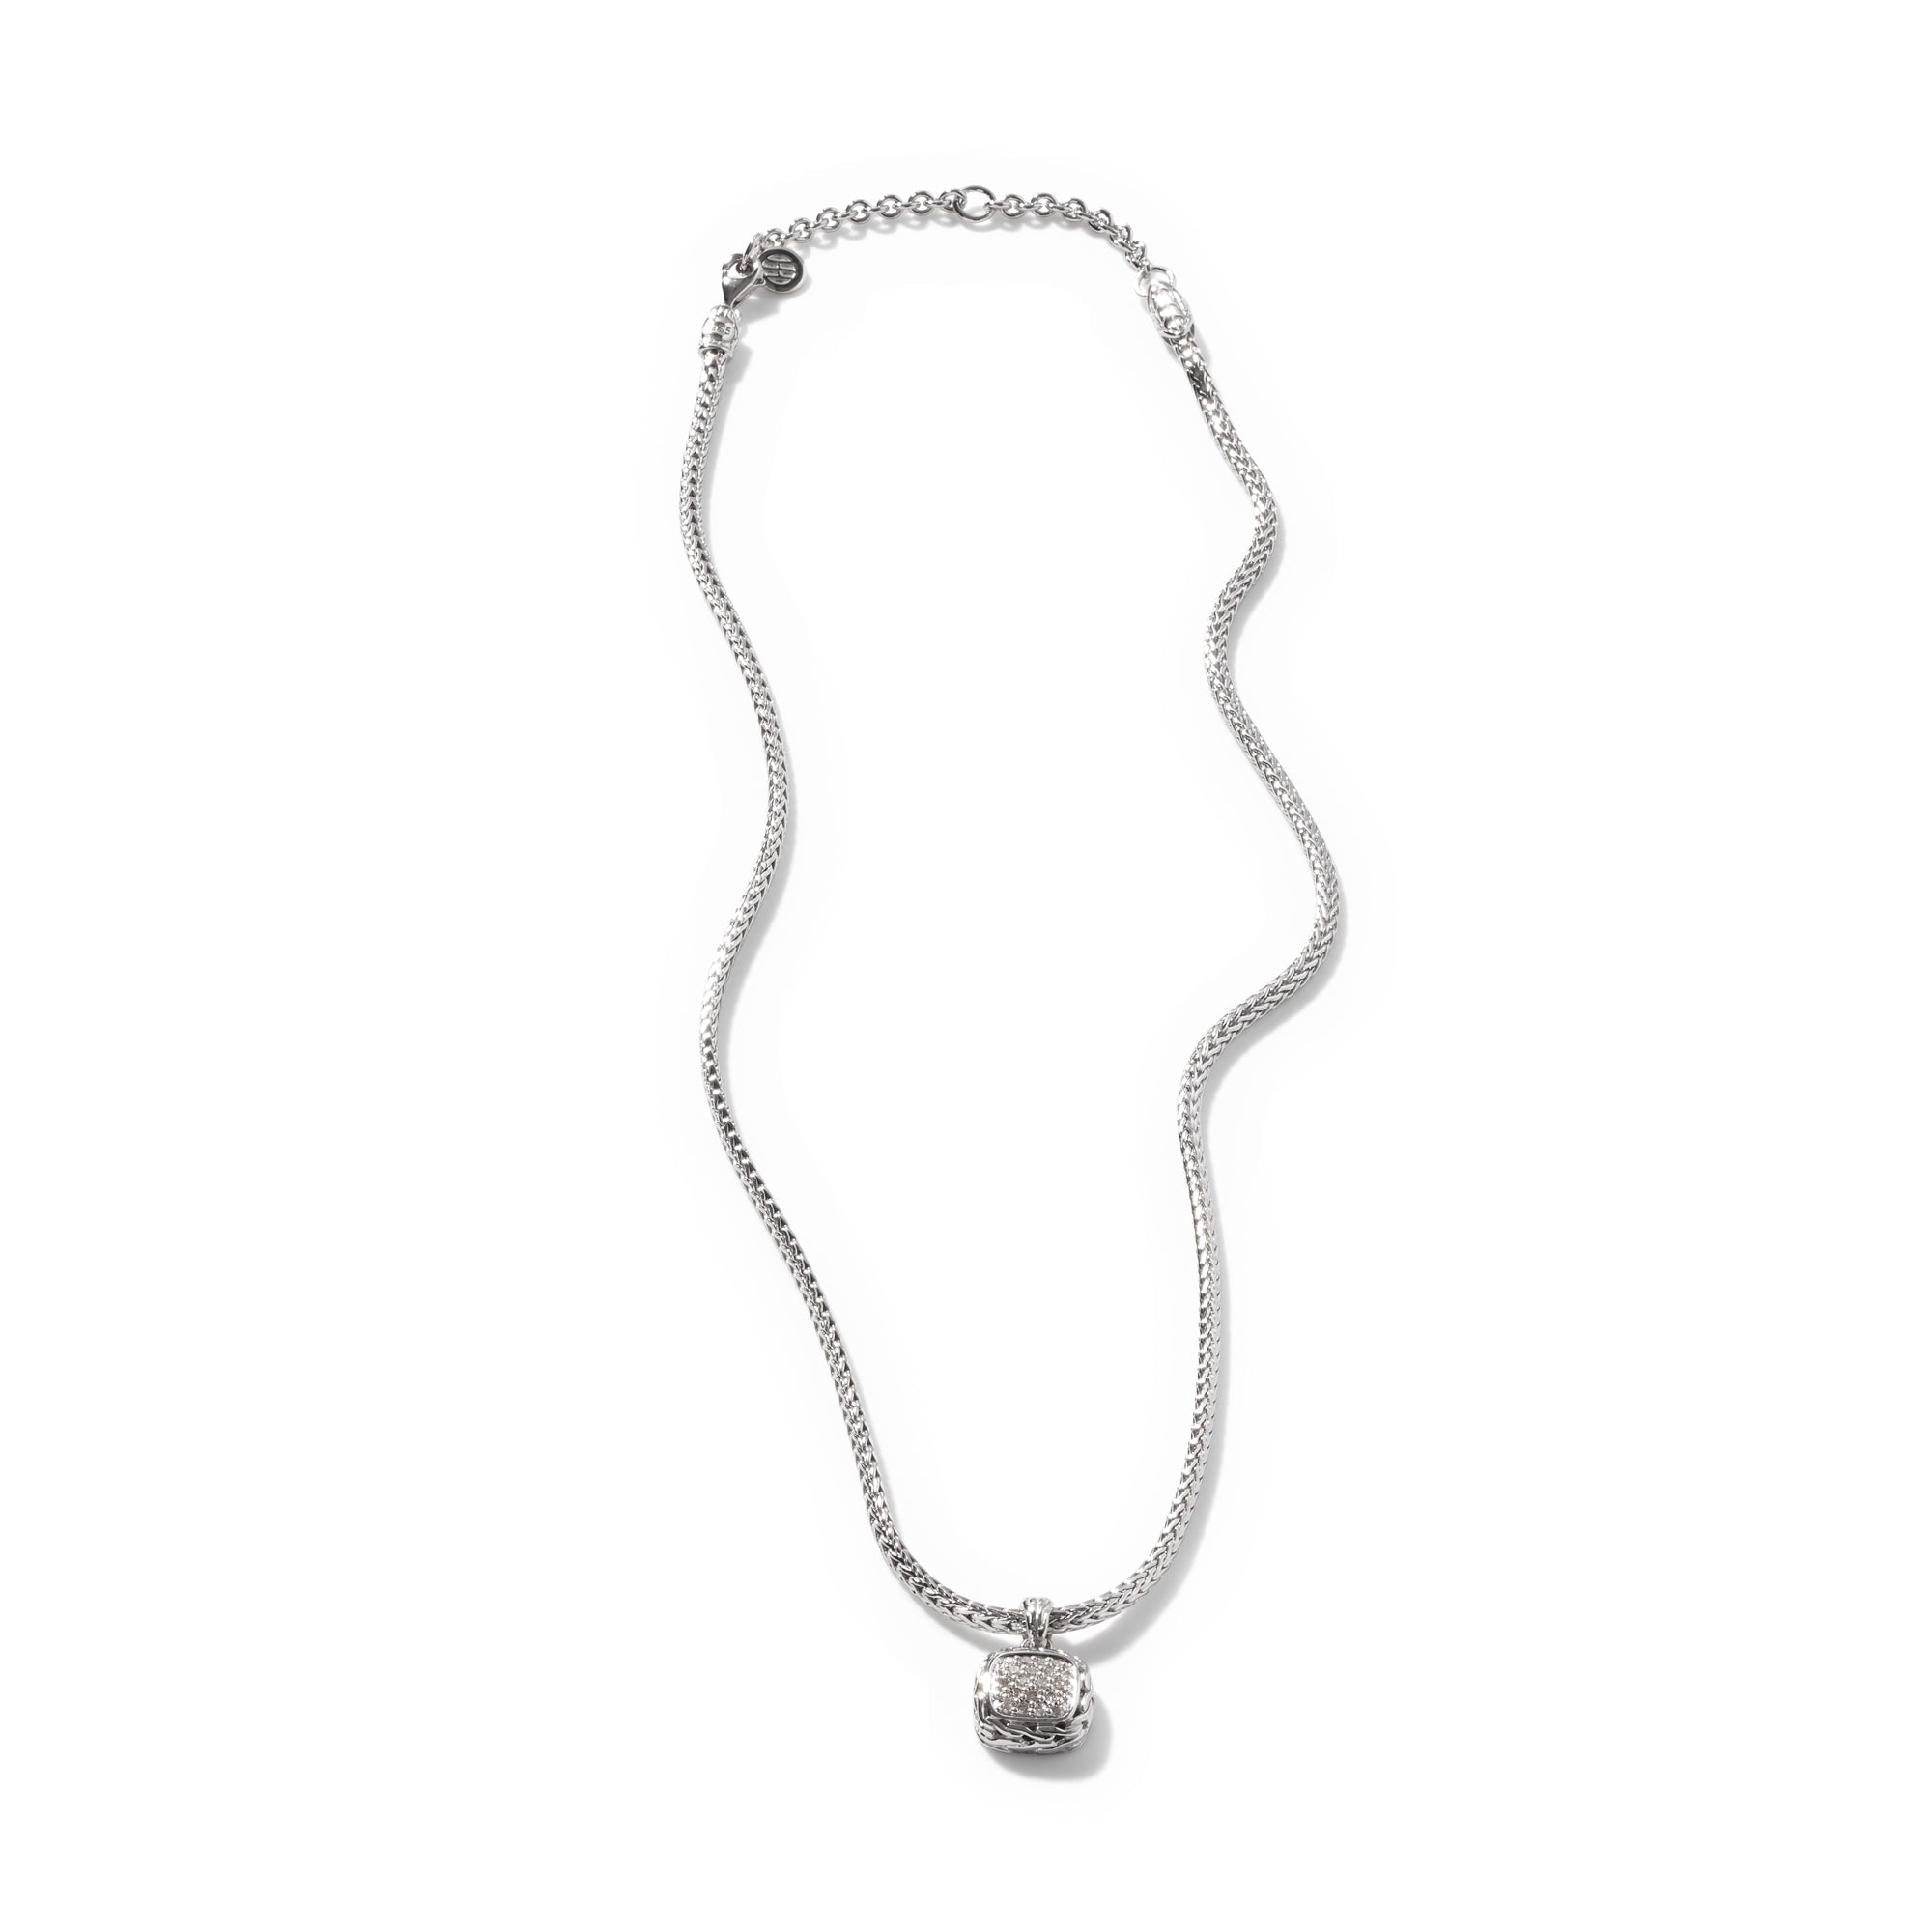 John Hardy Men's Heishi Bead Sterling Silver Necklace Chain